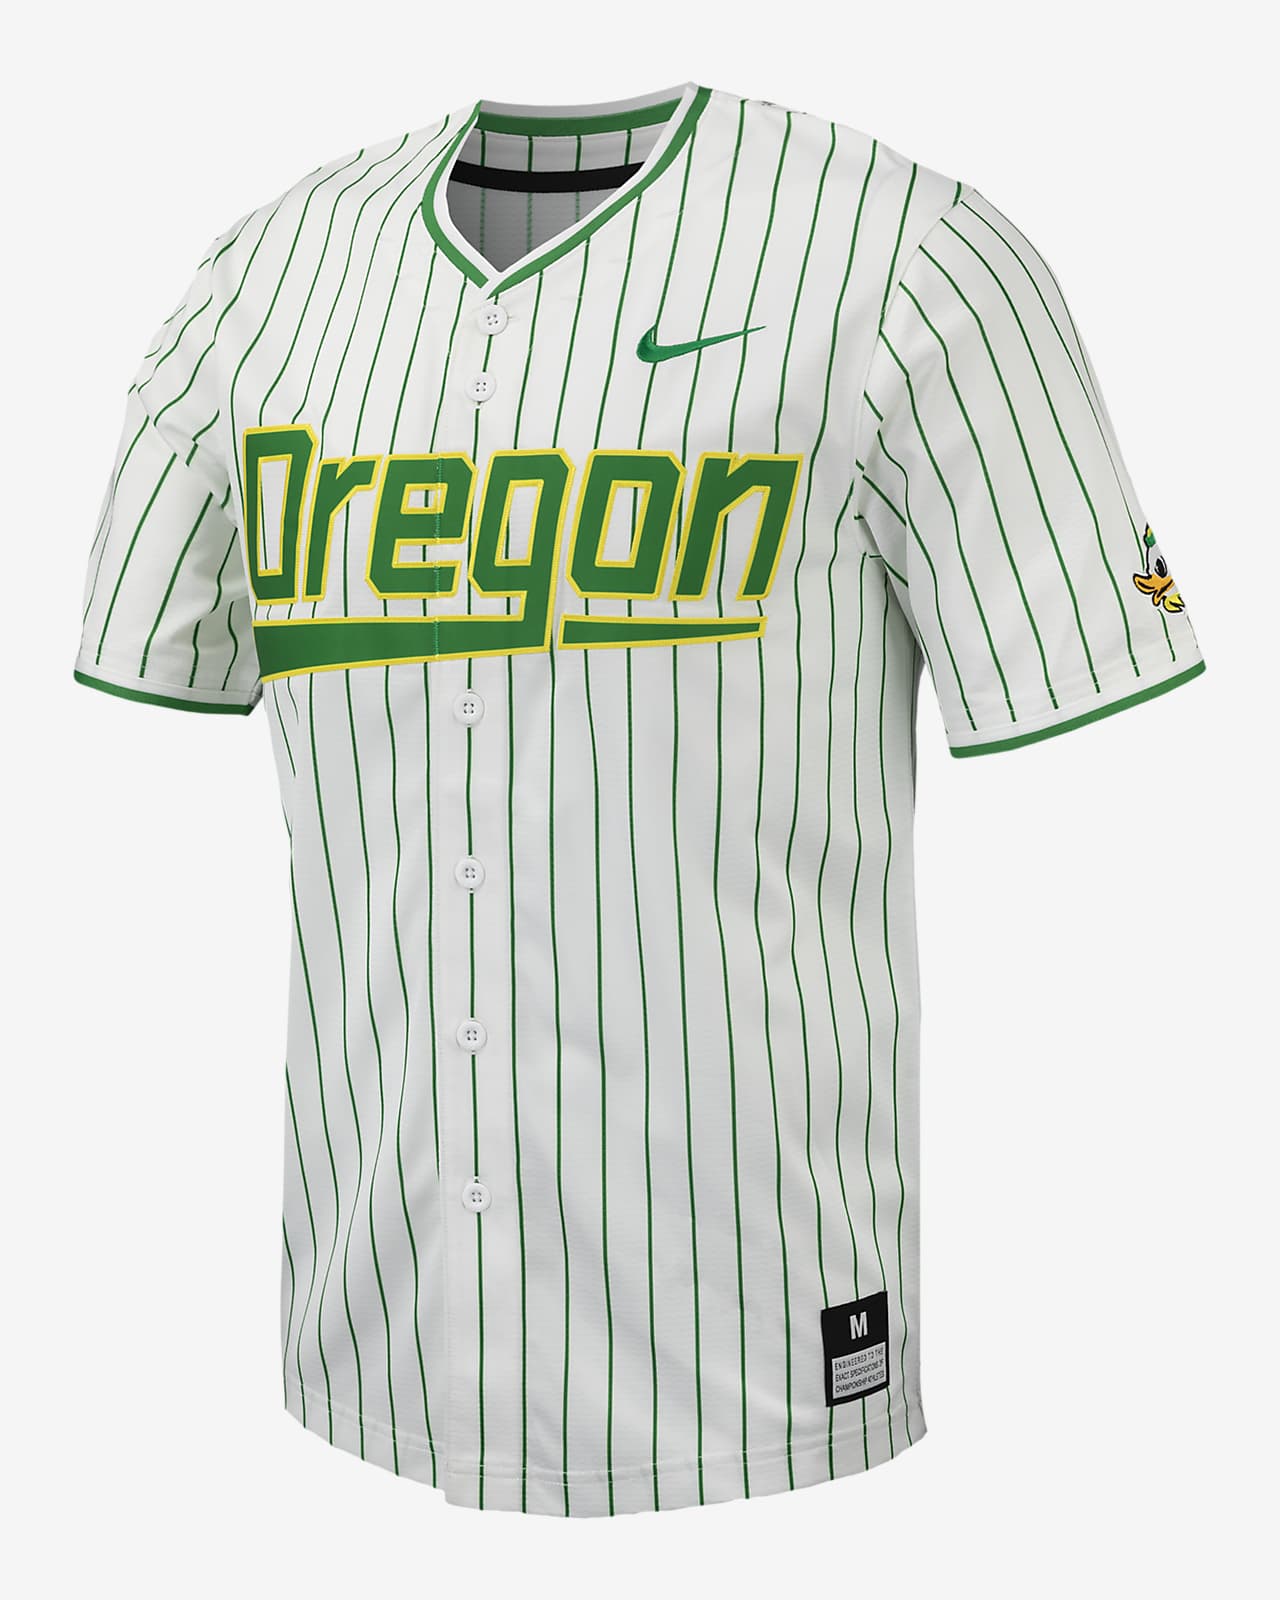 Oregon Men's Nike College Replica Baseball Jersey